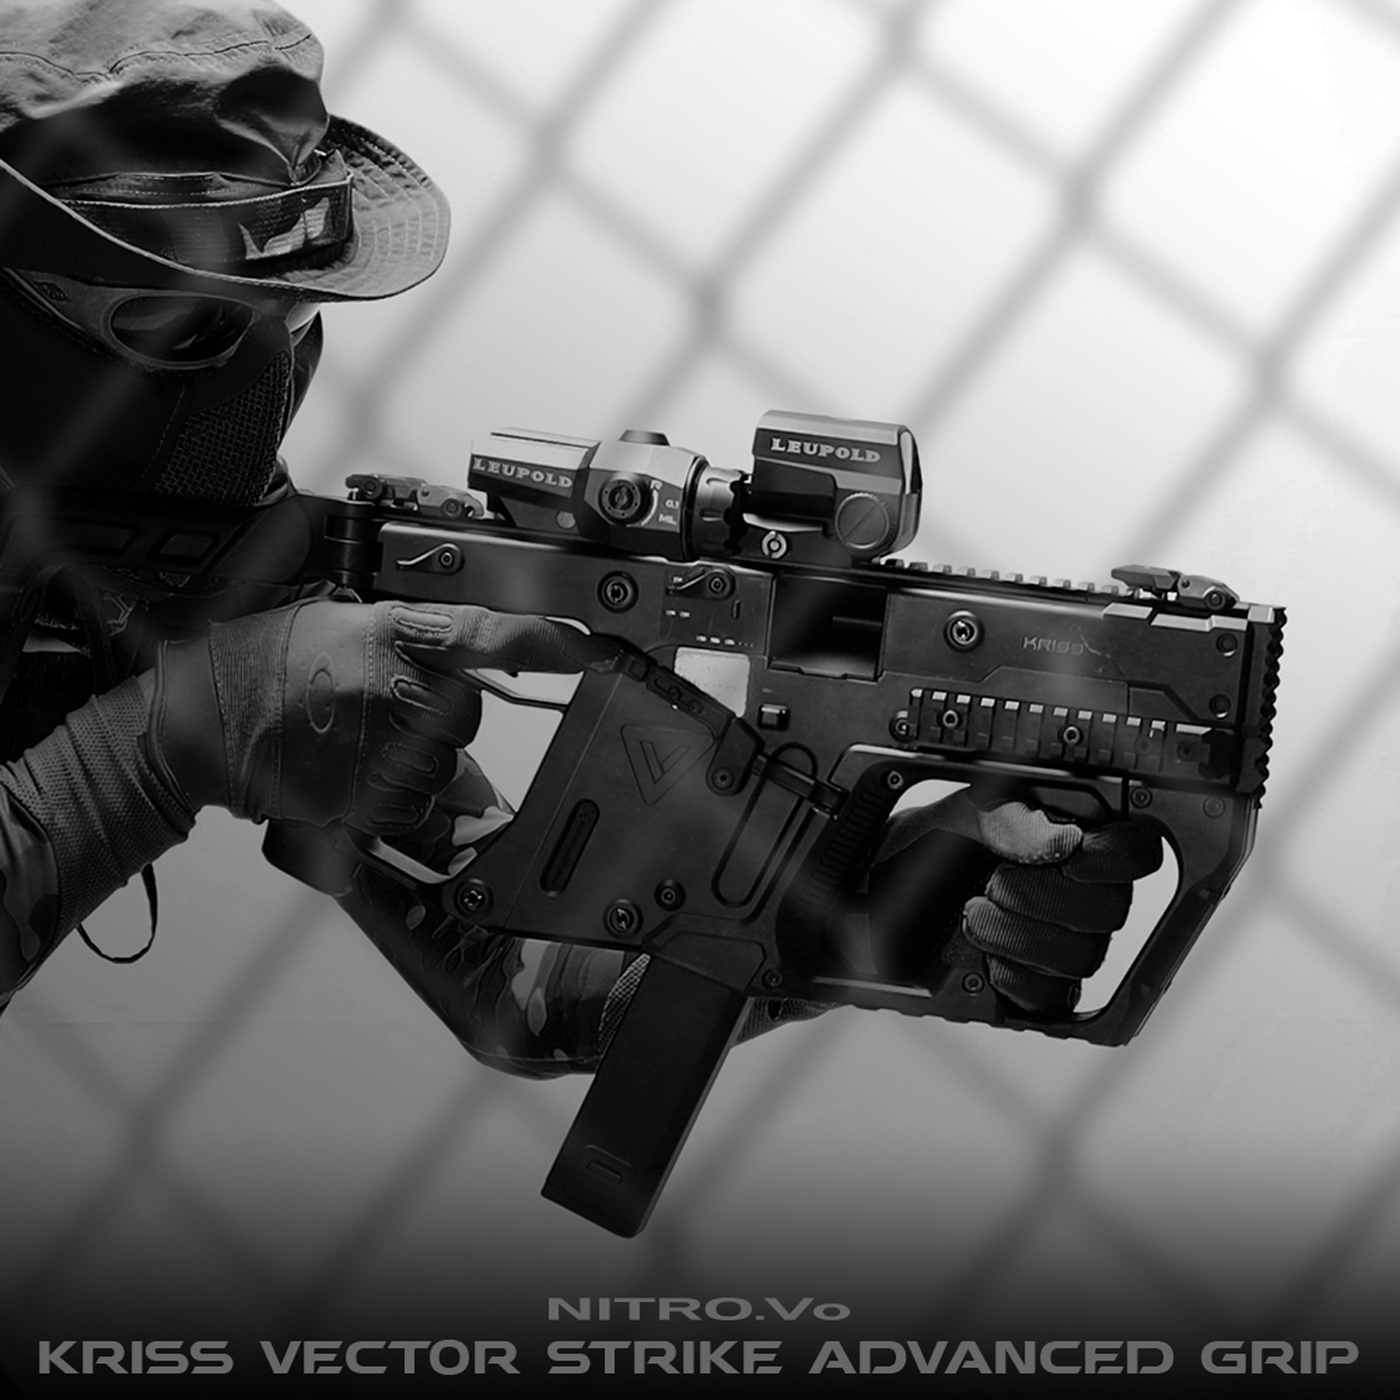 Nitro.Vo KRISS Vector Strike Knuckle Guard & Advanced Grip 07